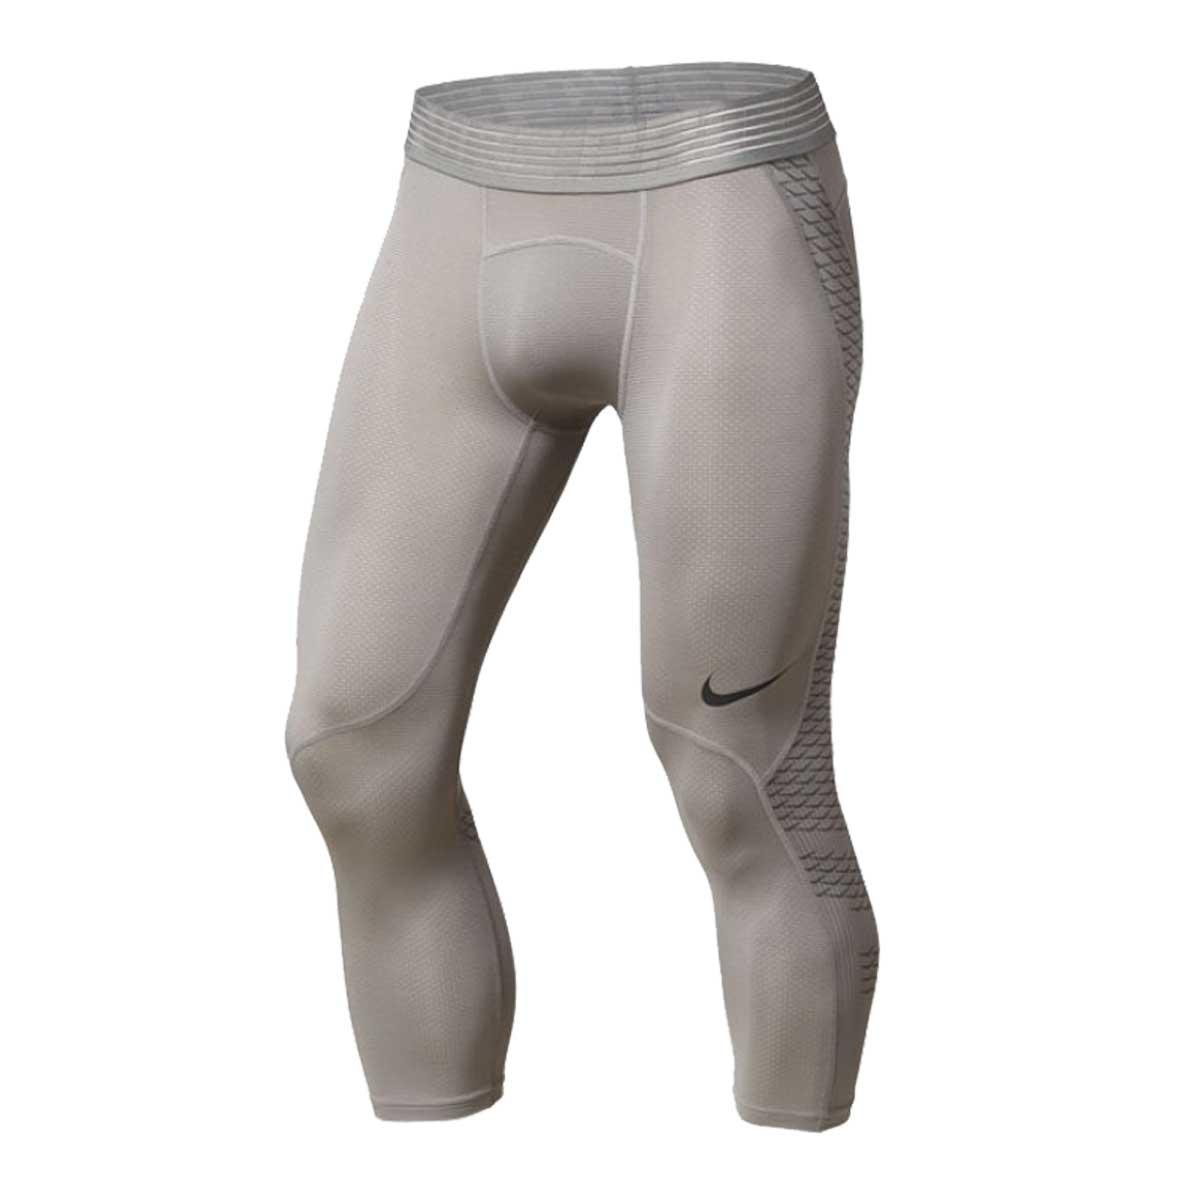 Nike pro combat compression leggings tights #8005 3/4